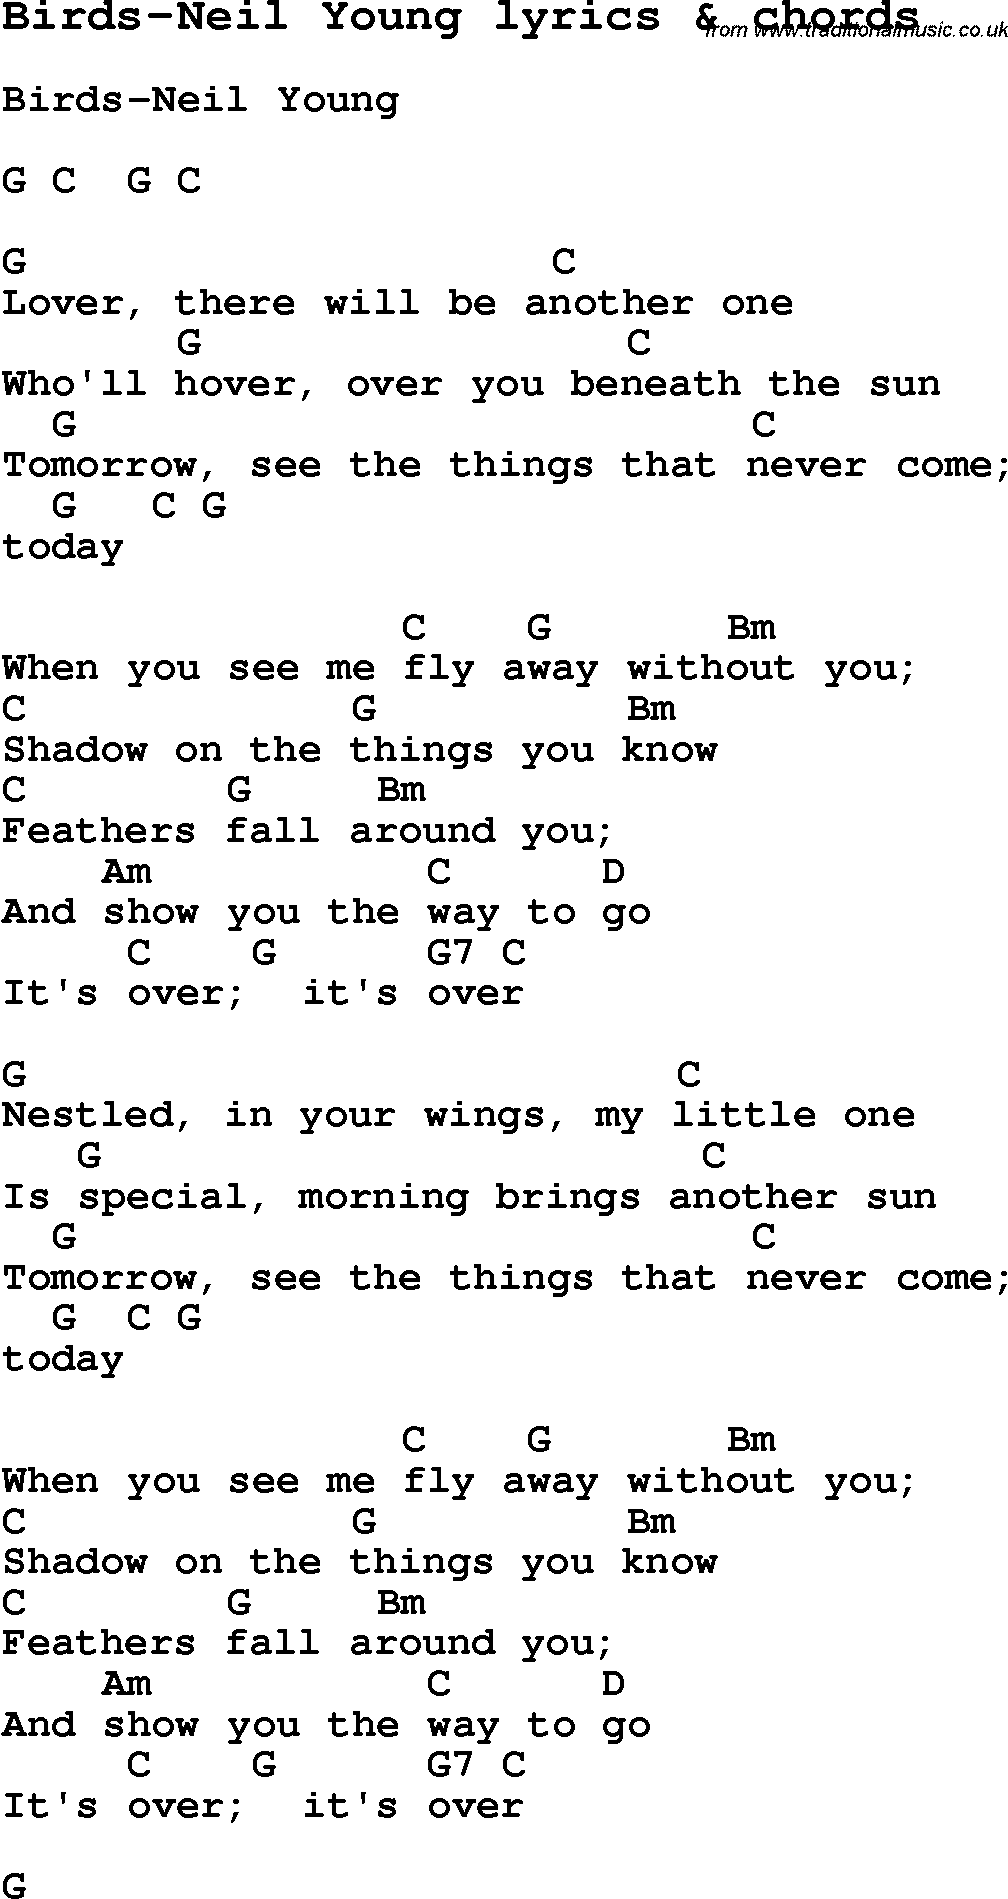 Love Song Lyrics for: Birds-Neil Young with chords for Ukulele, Guitar Banjo etc.